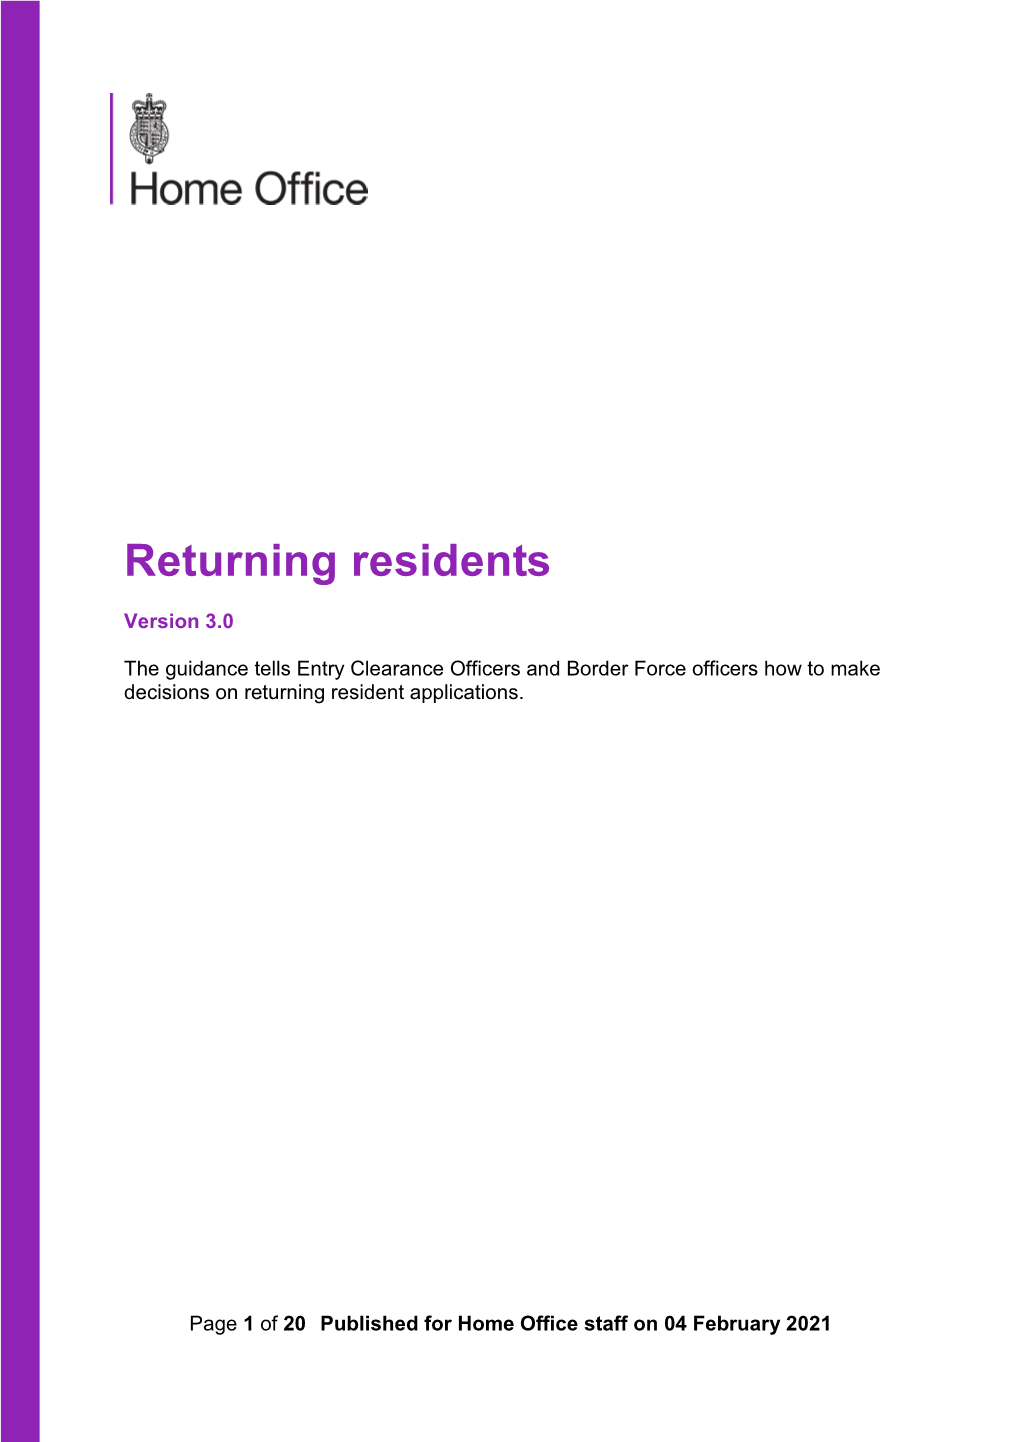 Returning Residents